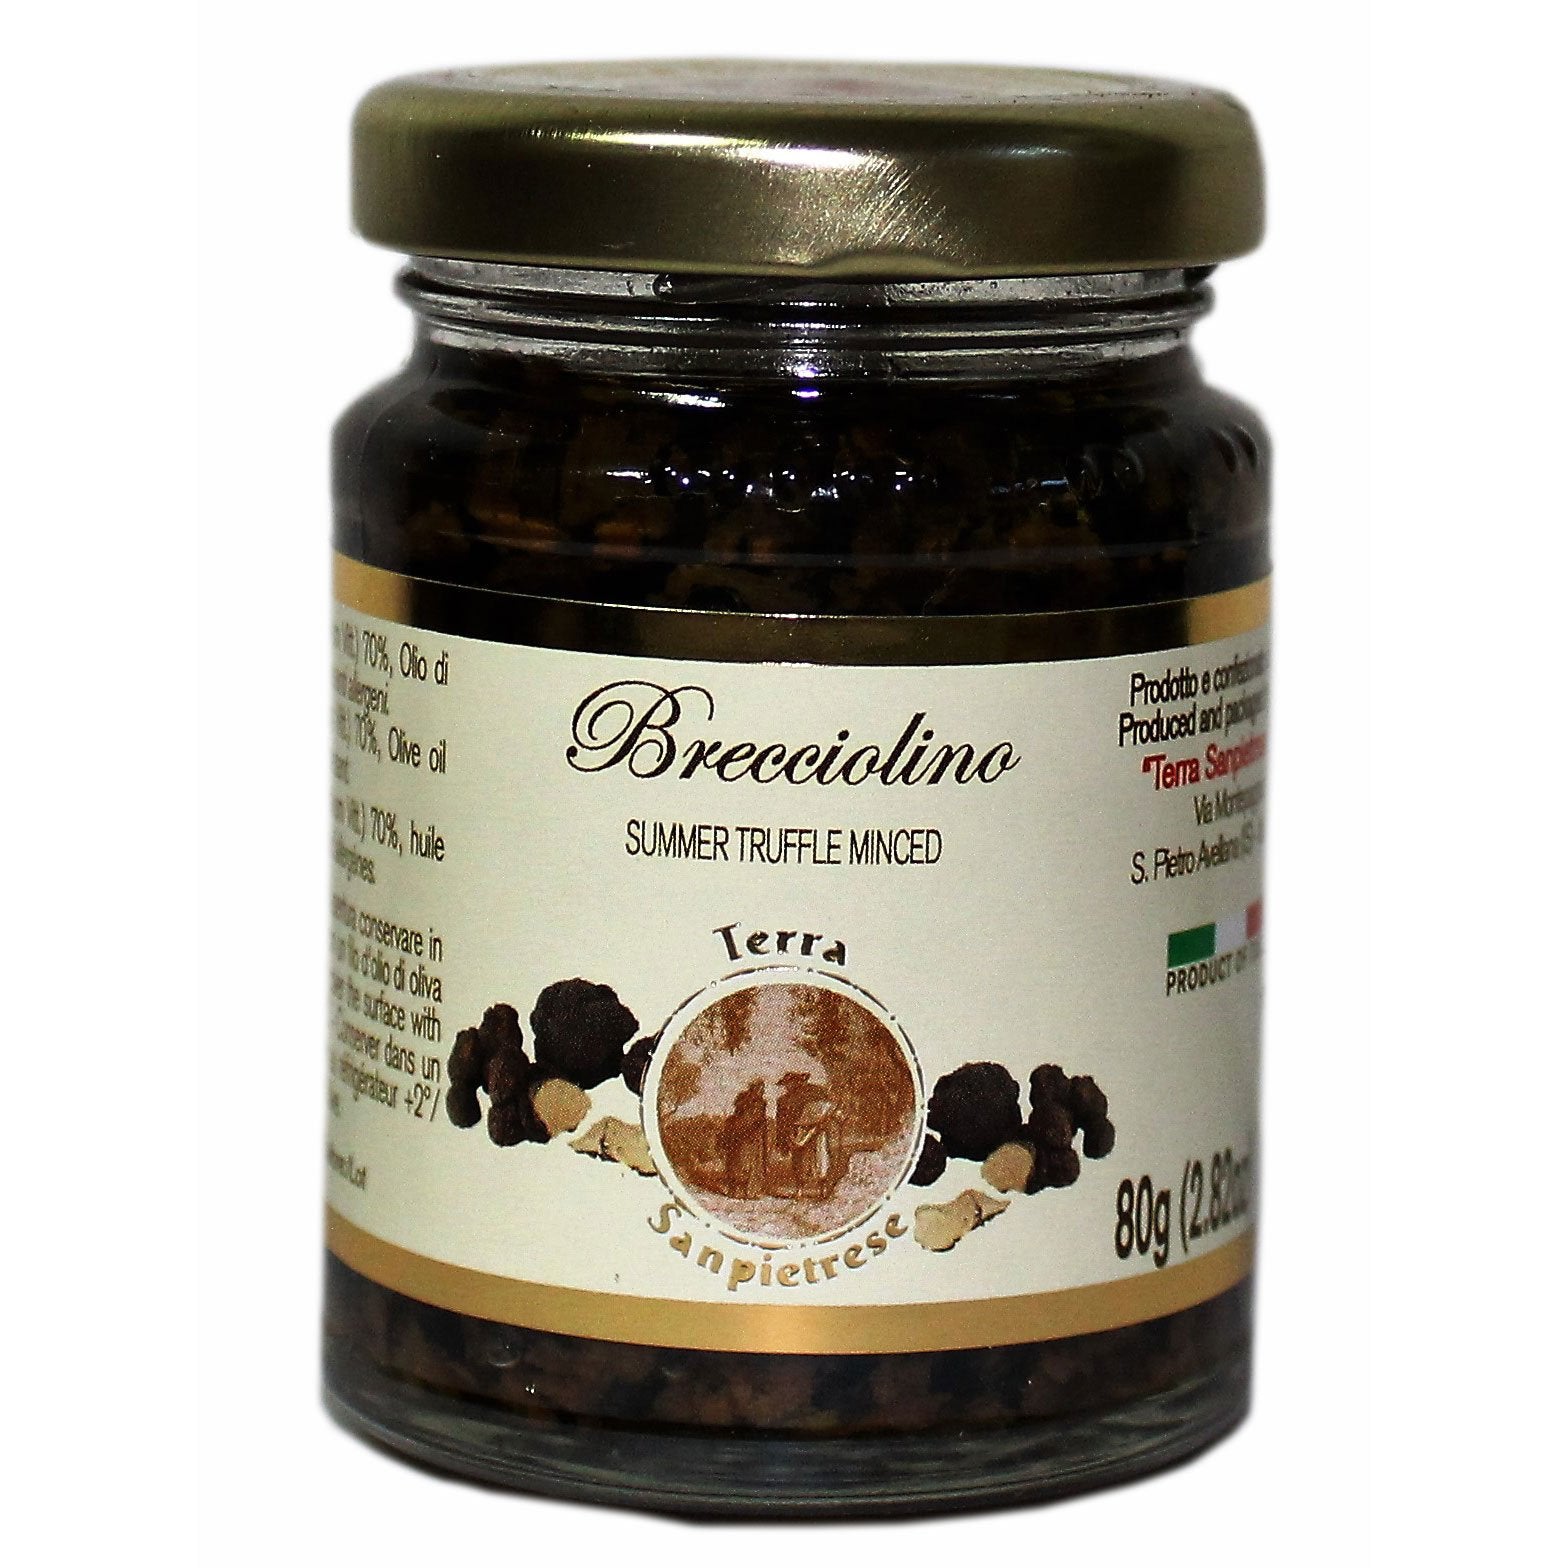 Box Raffaello - black truffles